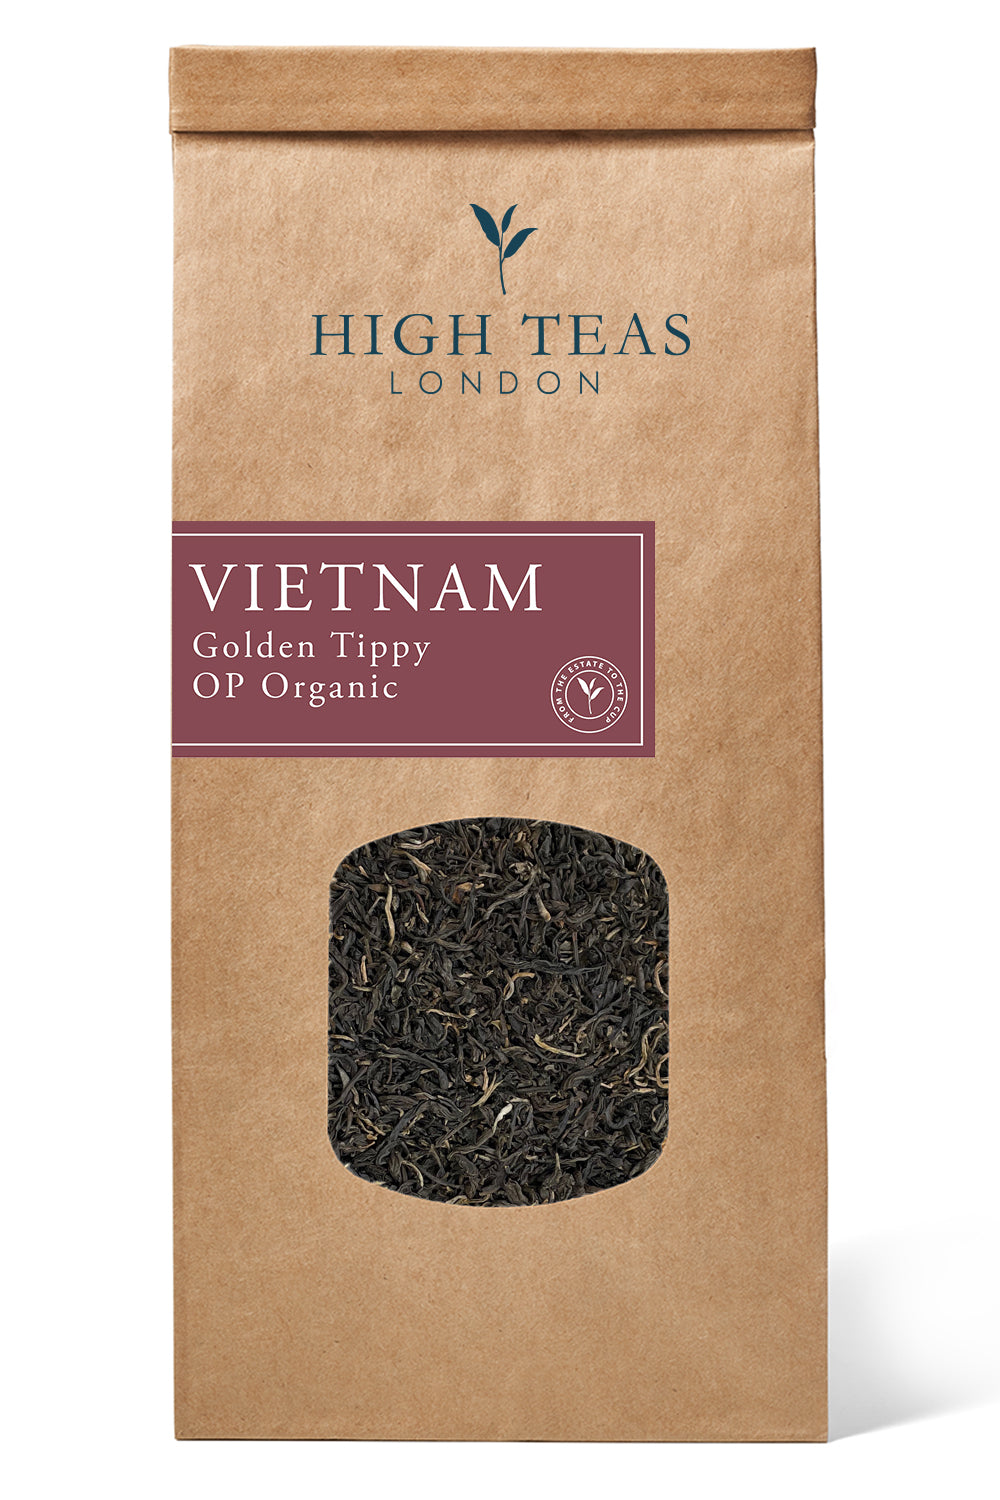 Vietnam Golden Tippy OP Organic-250 grams-Loose Leaf Tea-High Teas